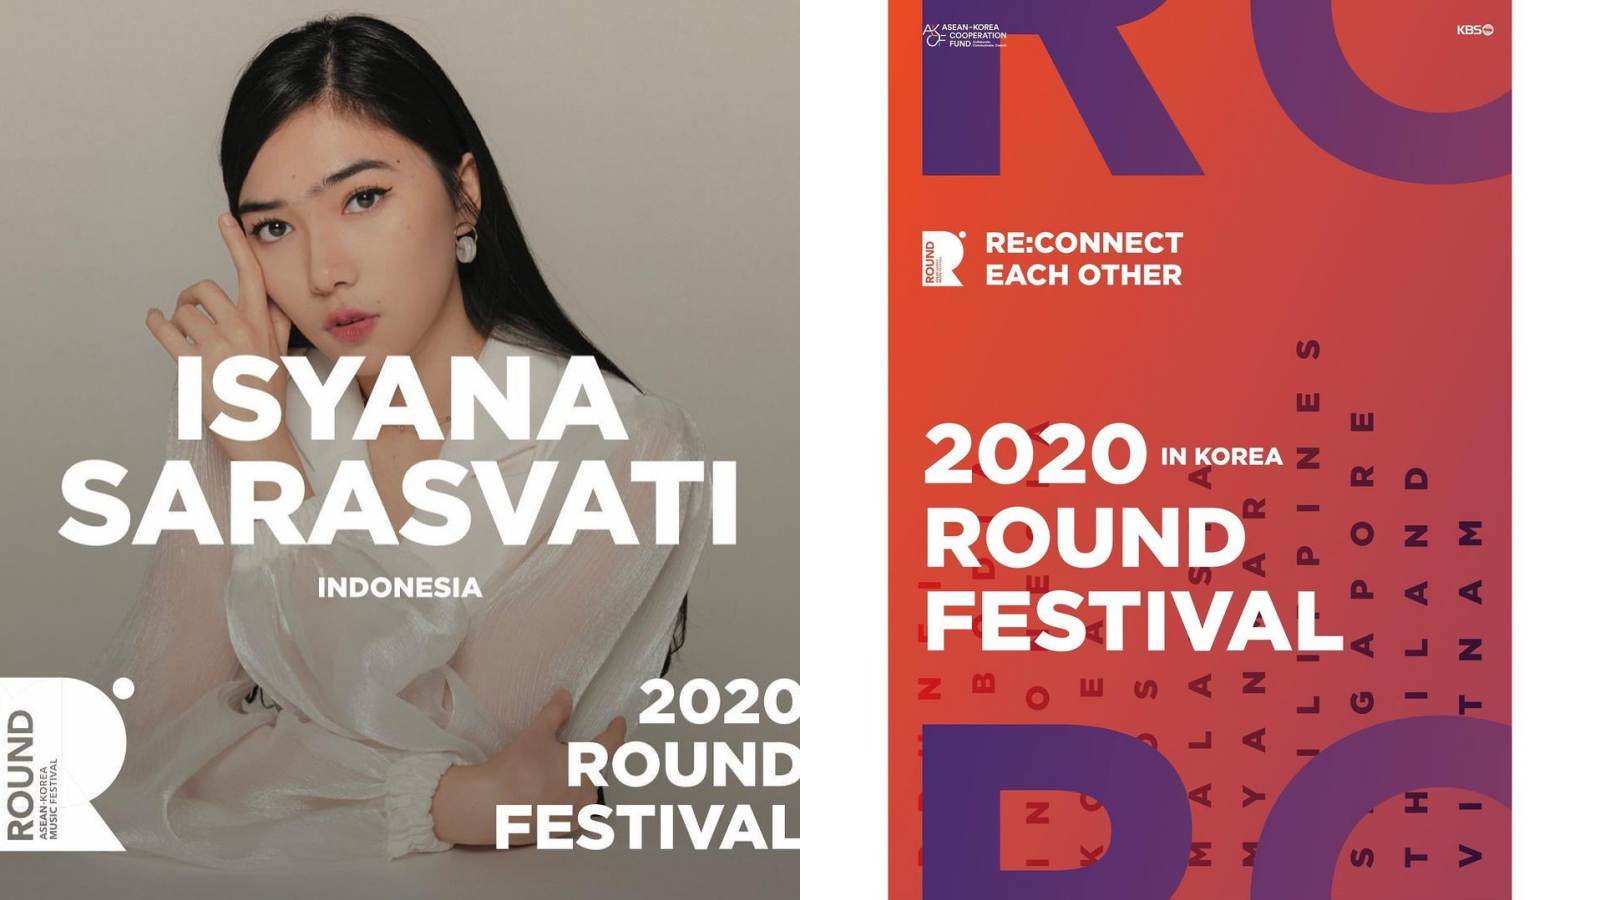 Bikin Bangga, Isyana Sarasvati Wakili Indonesia di ROUND ASEAN-Korea Music Festival 2020 Gaes